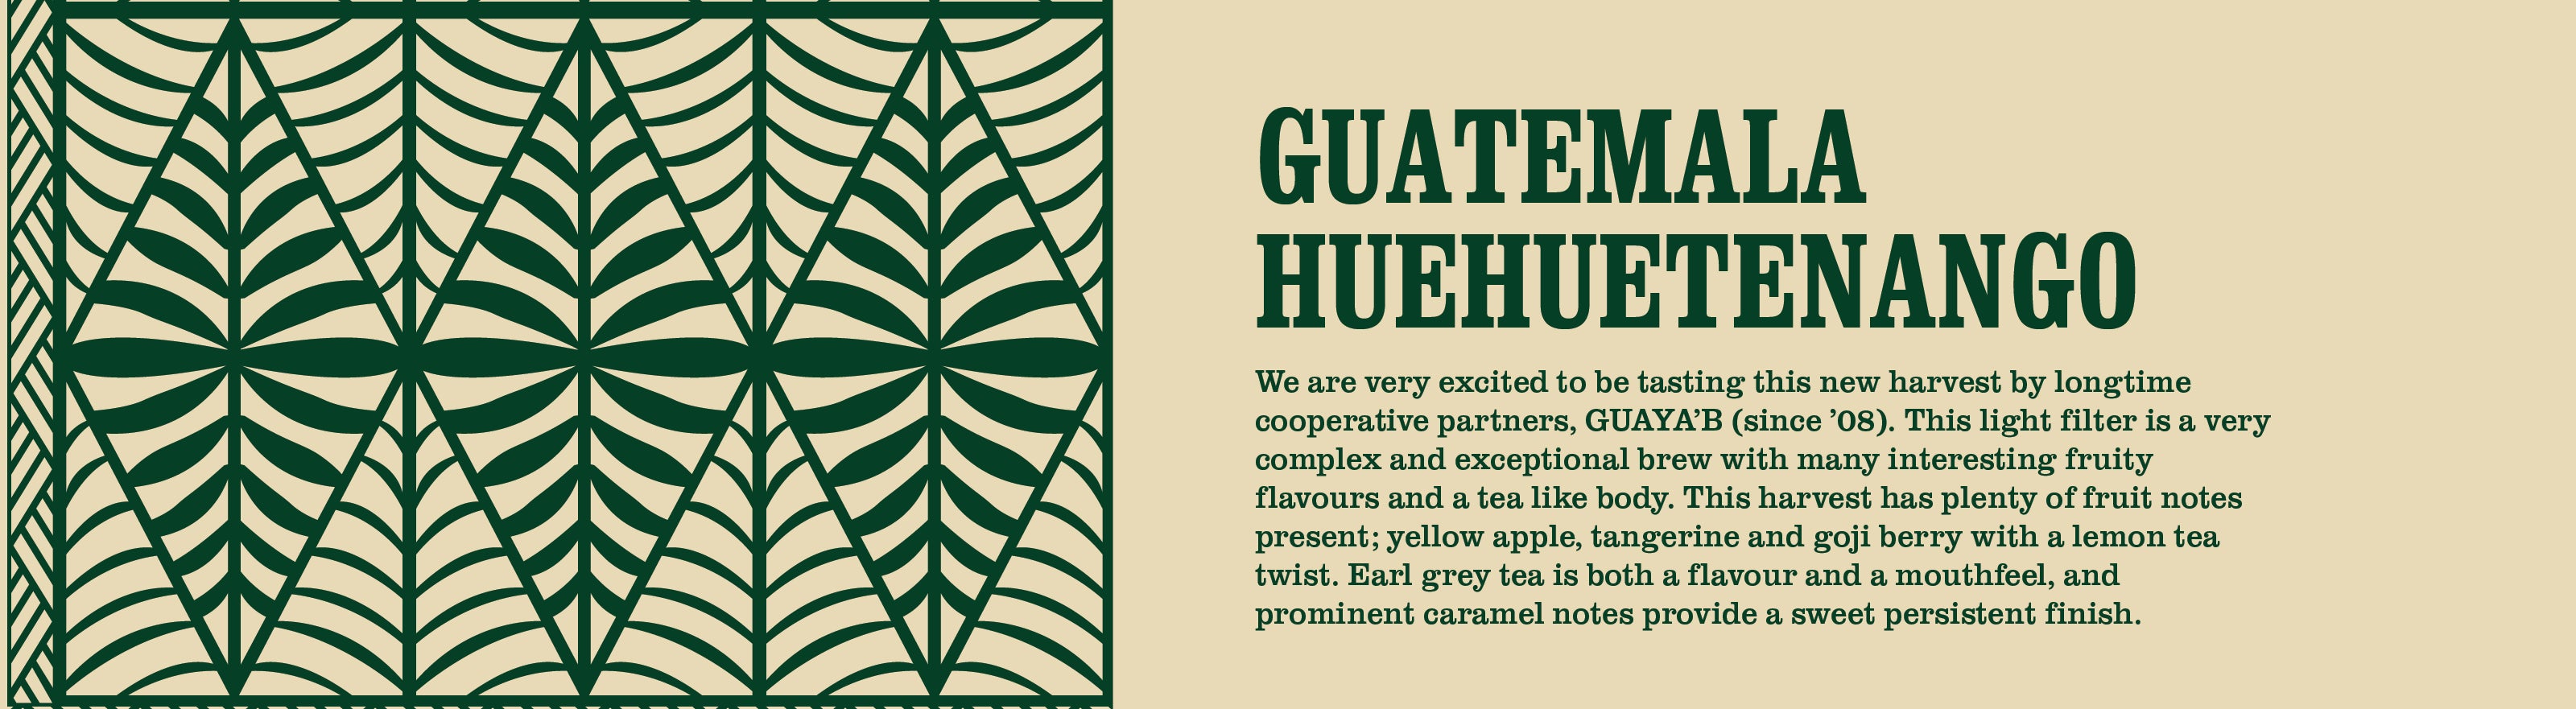 guatemala coffee informational image